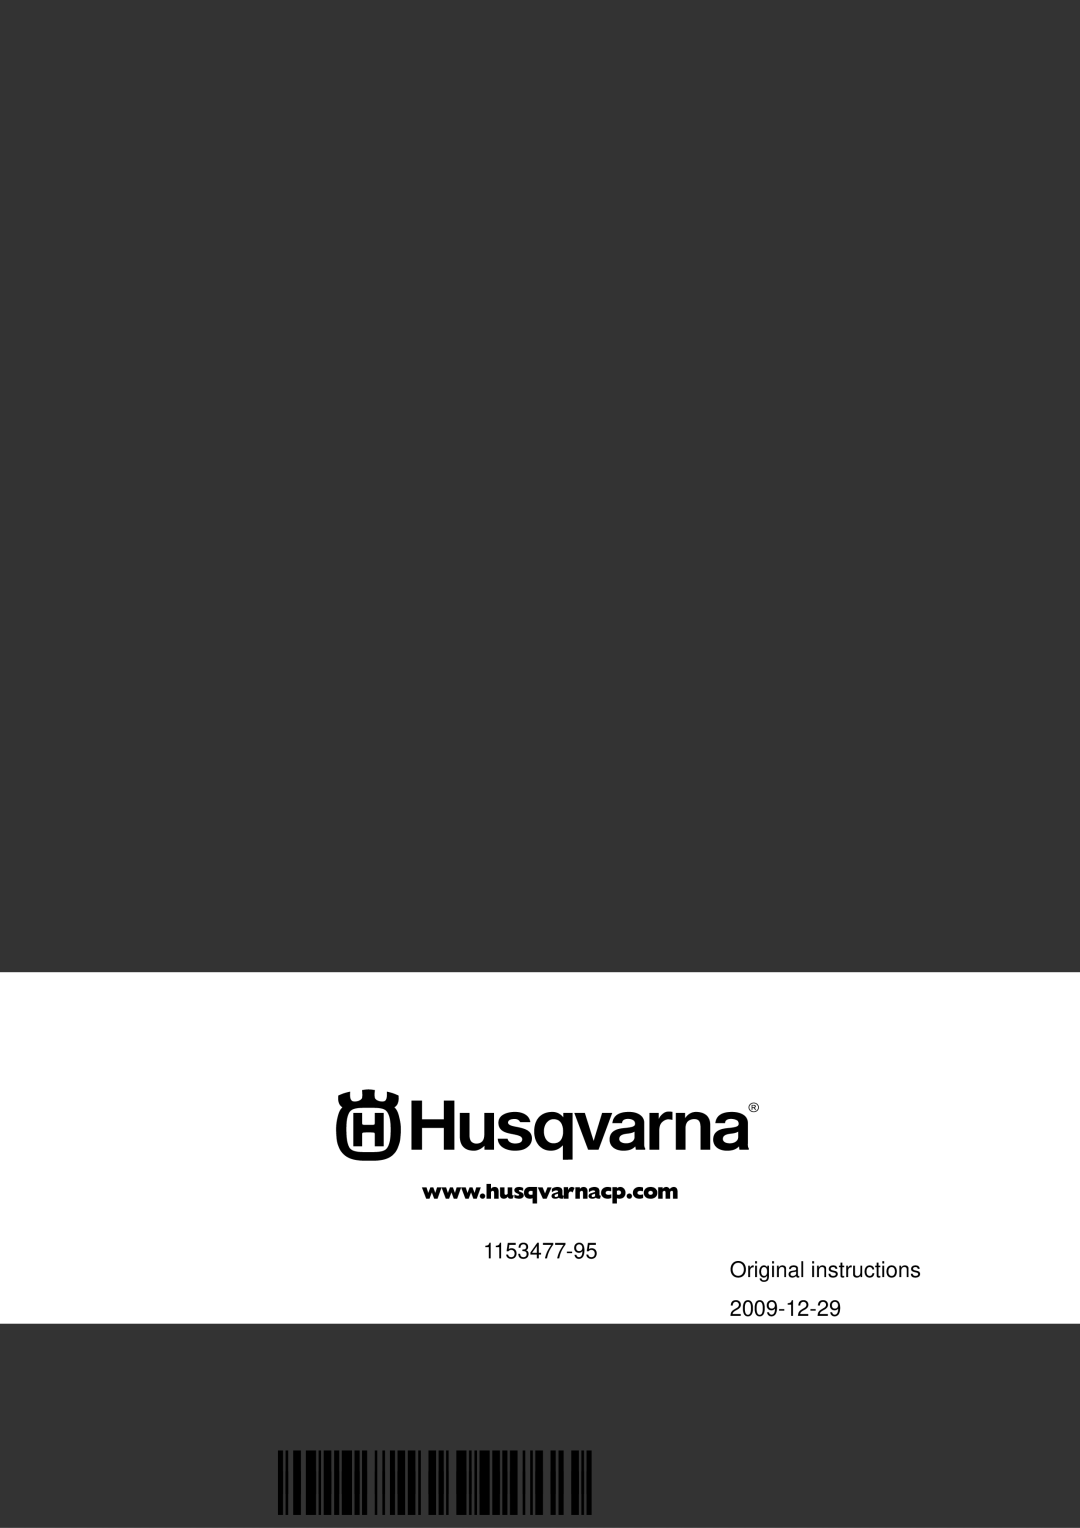 Husqvarna 2000 manual ´z+UOo¶5N¨ ´z+UOo¶5N¨, Original instructions 